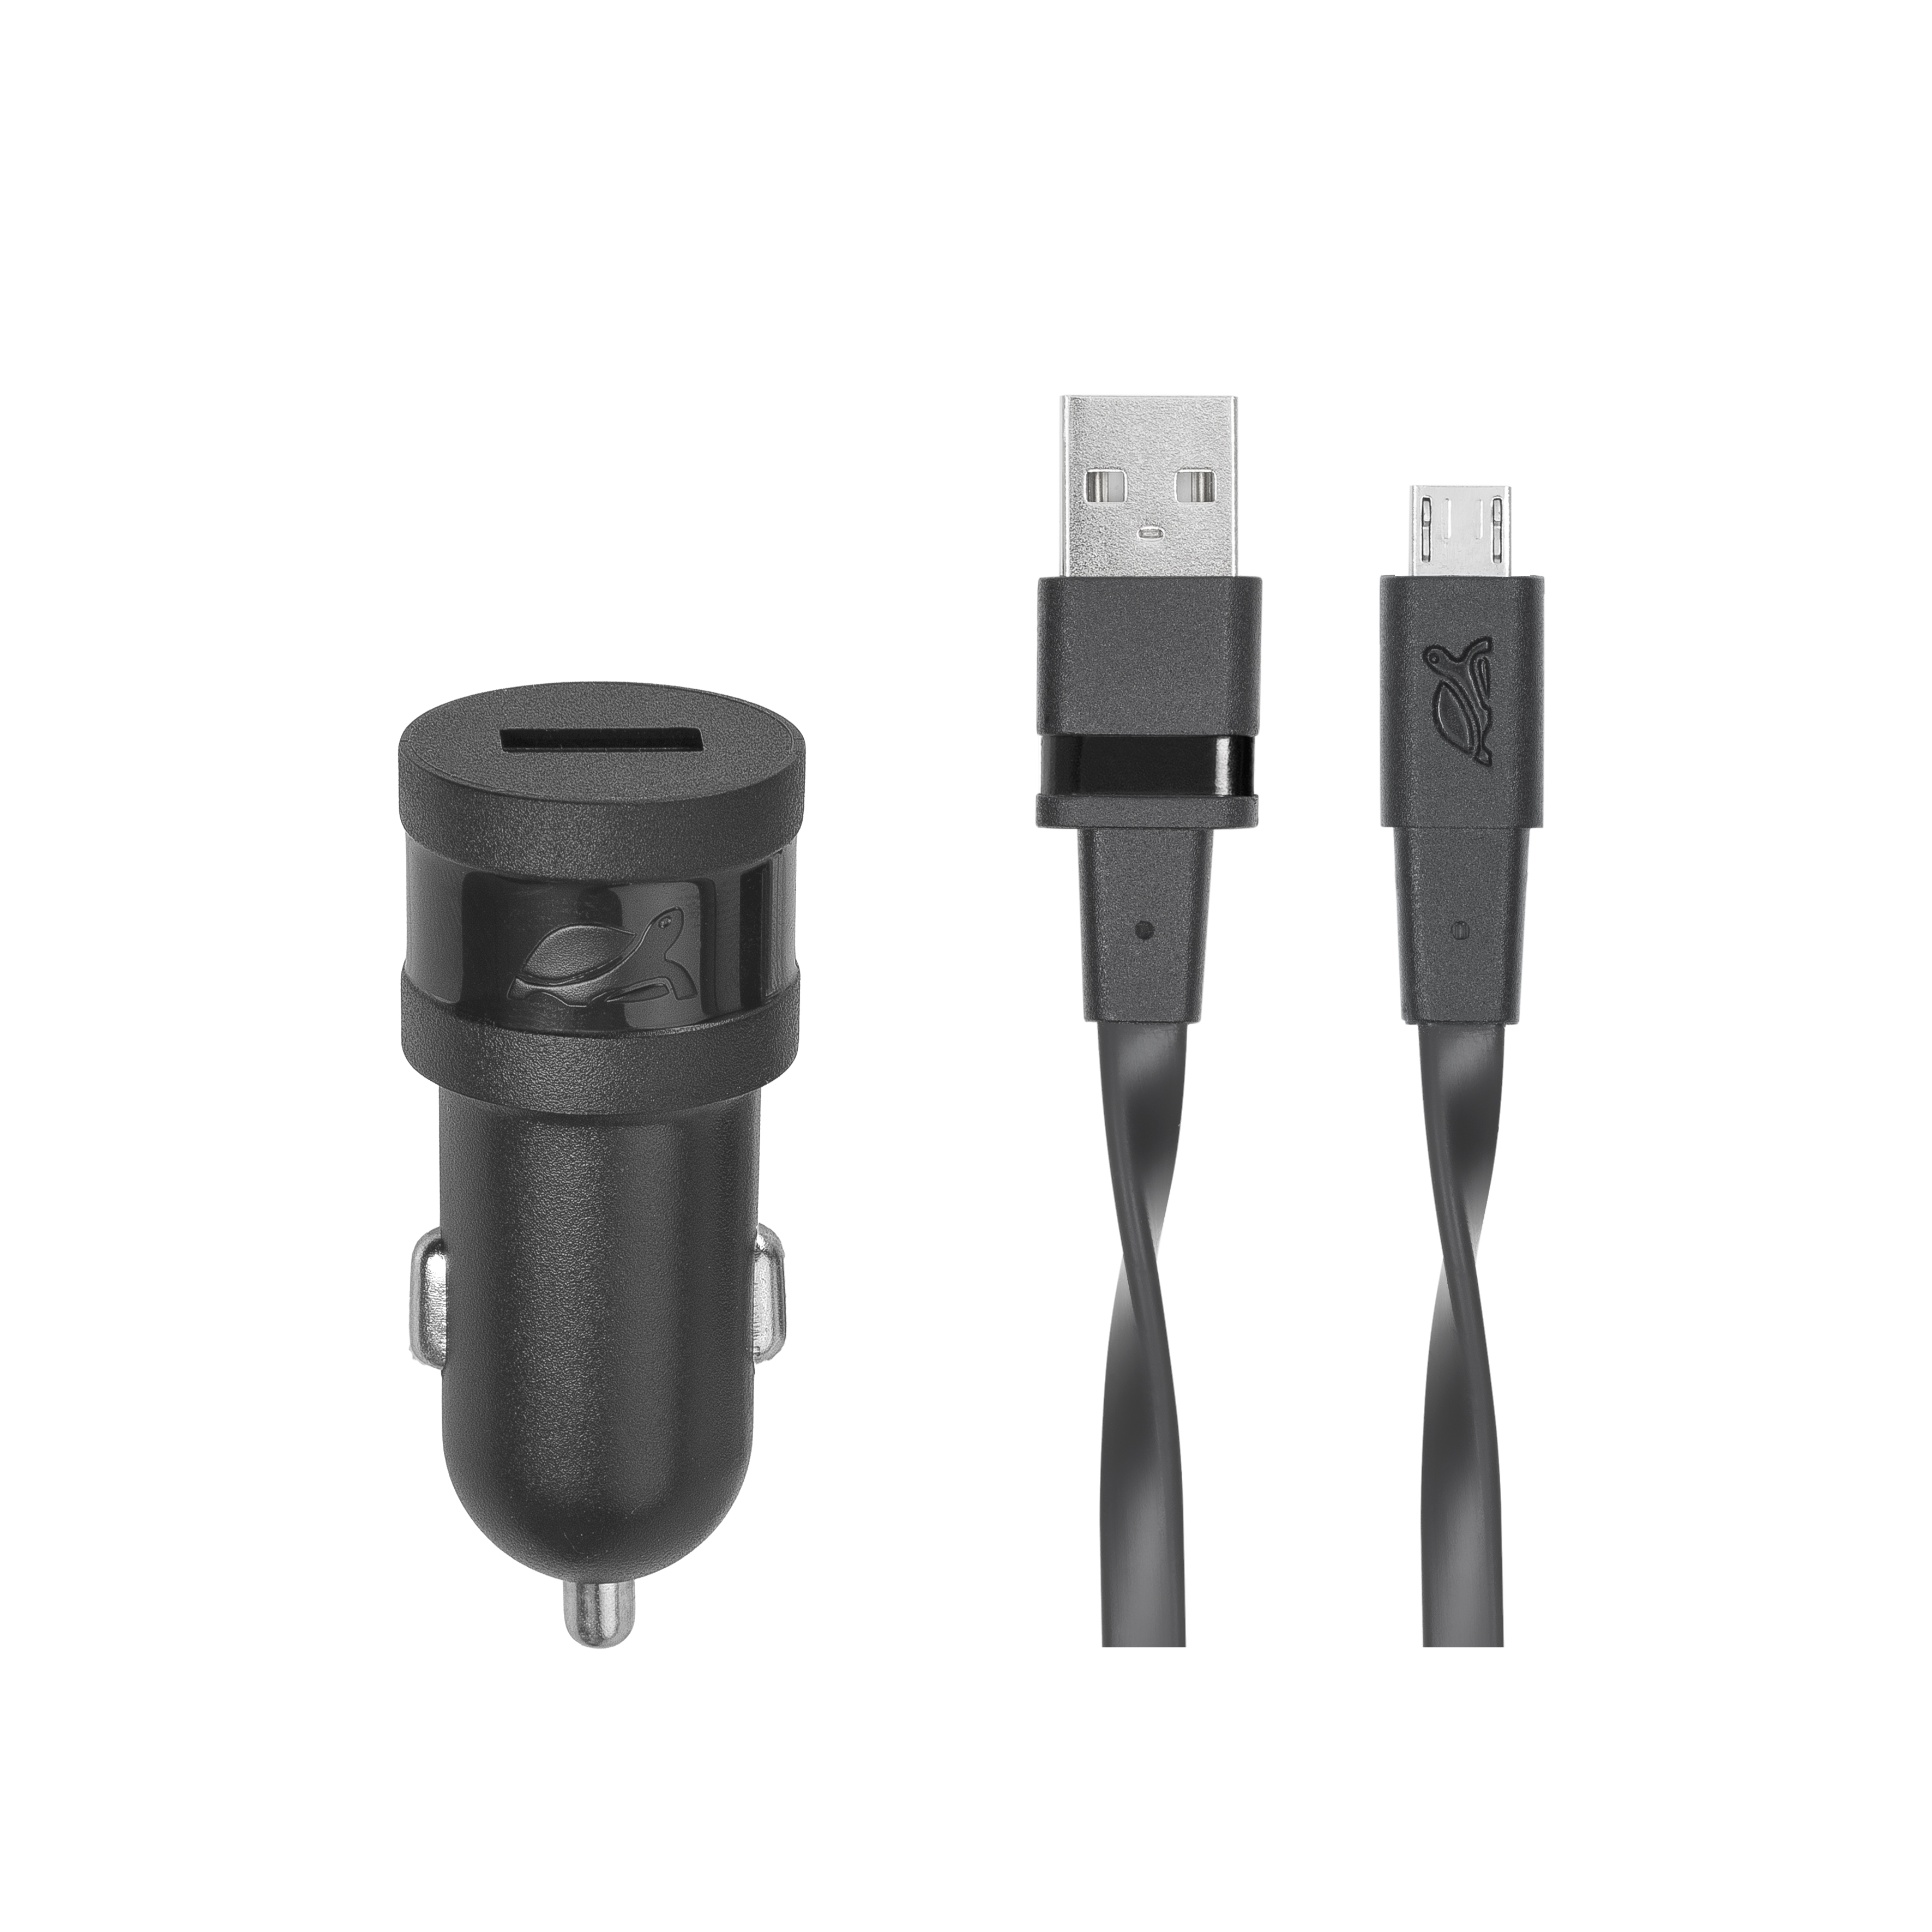 Riva Power 4211 BD1 automobilový adaptér 1,0A/1 USB, černá, 12V + mikro USB kabel